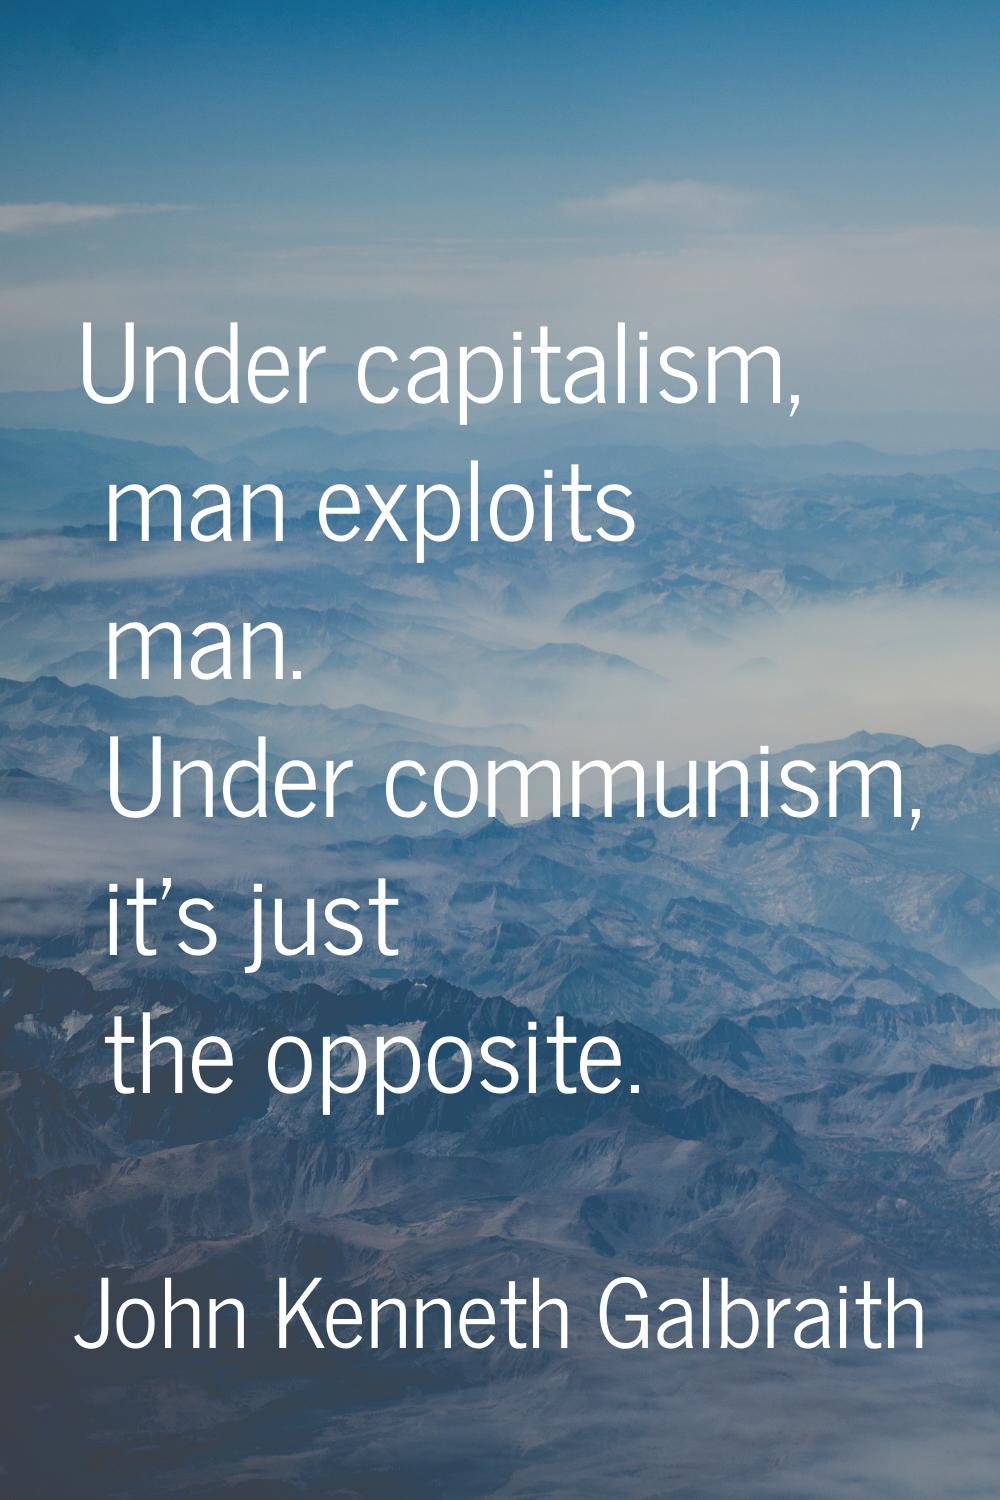 Under capitalism, man exploits man. Under communism, it's just the opposite.